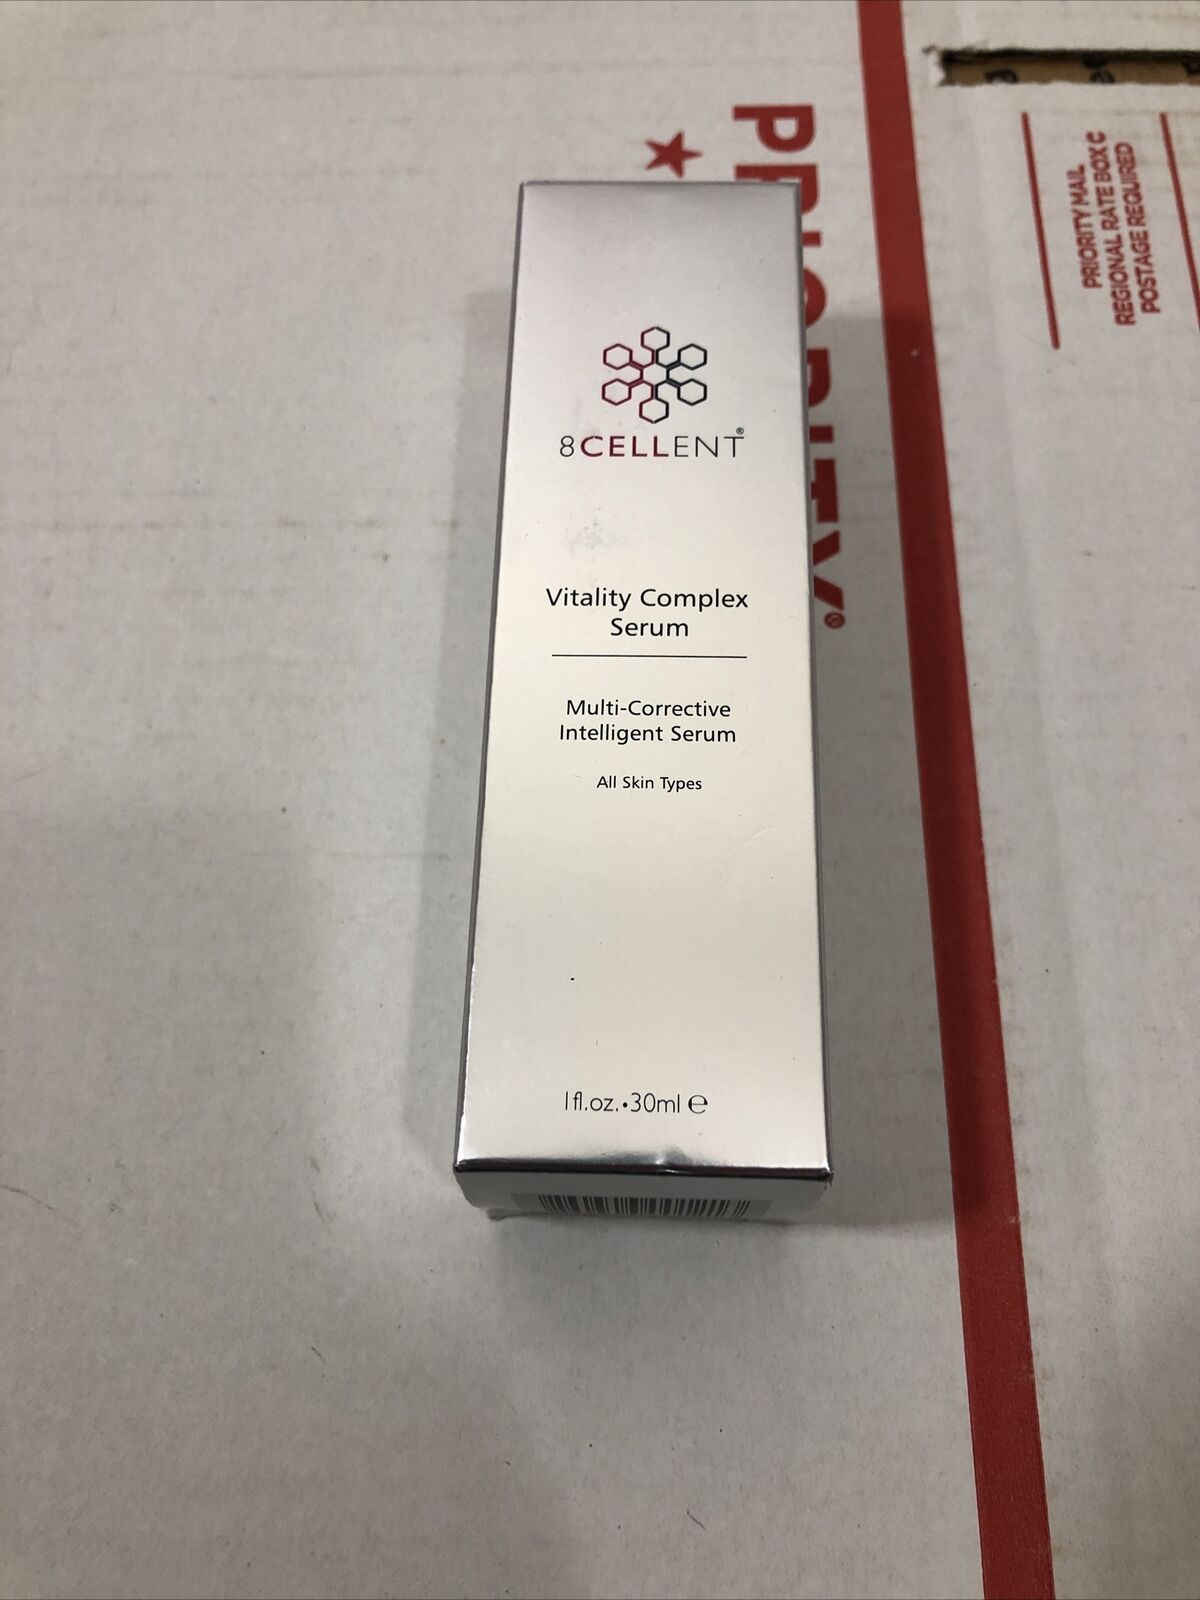 8Cellent Vitality Complex Serum 1 fl oz Skin Care New Sealed